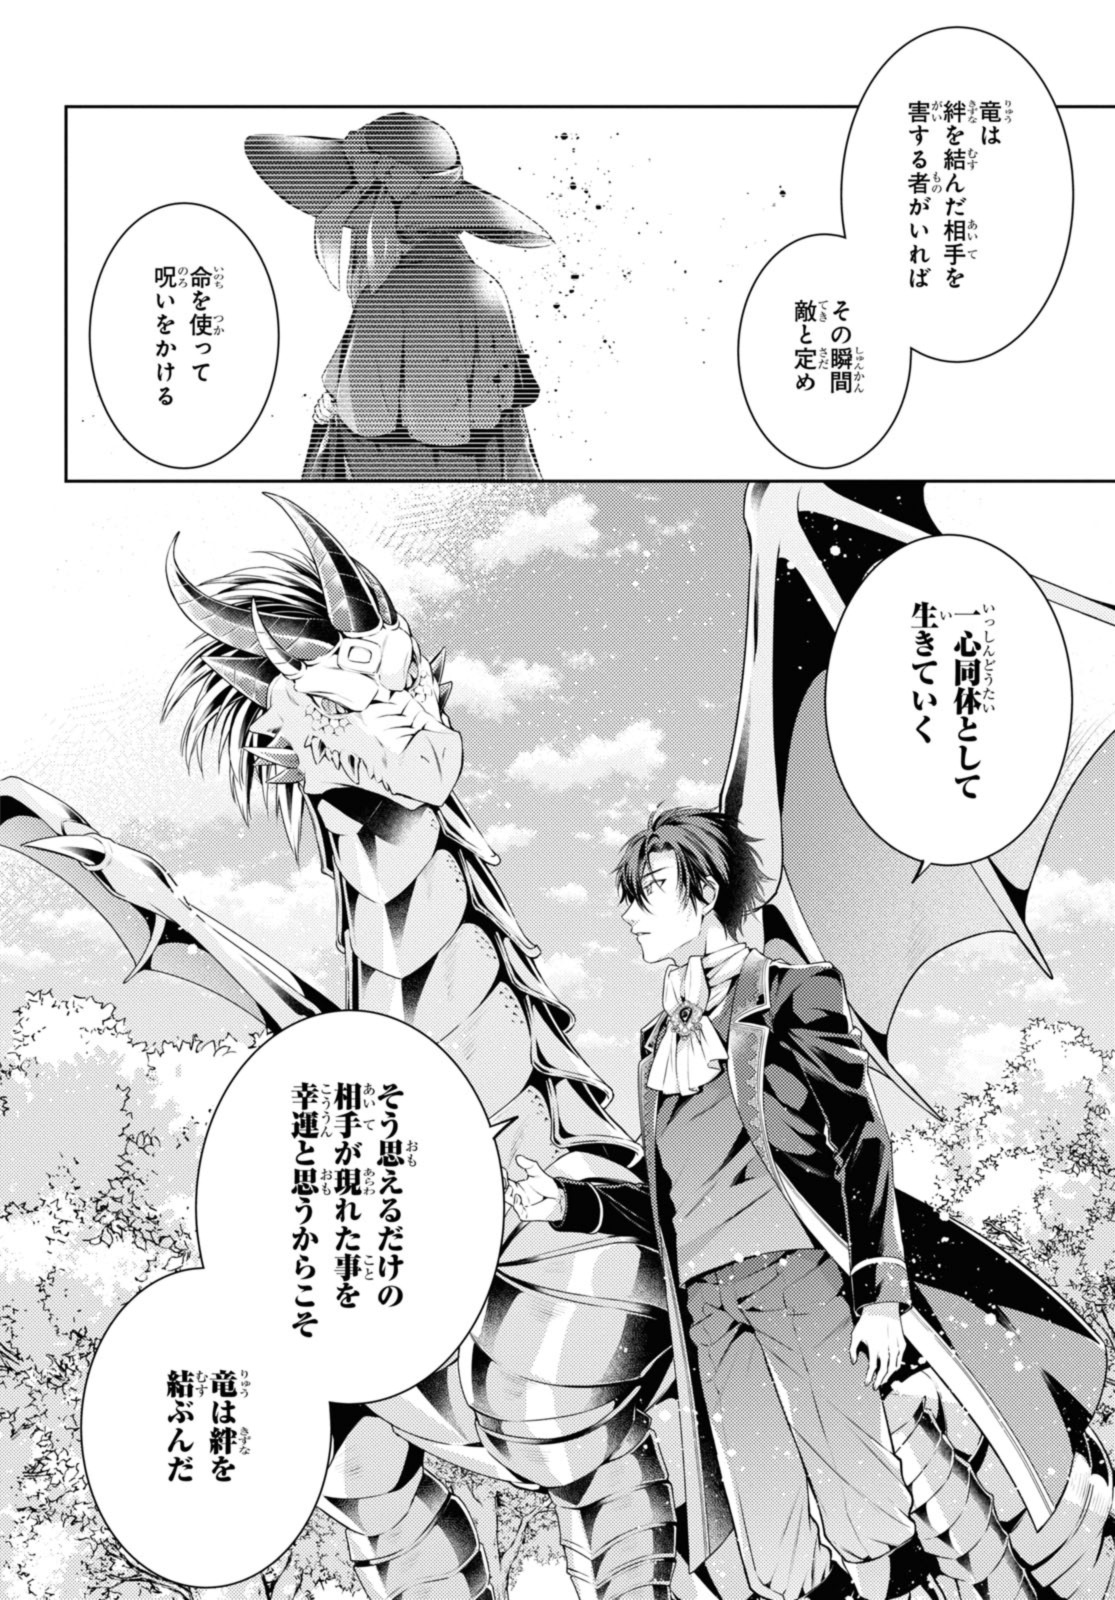 Ryukishi no Okiniiri - Chapter 46.1 - Page 12